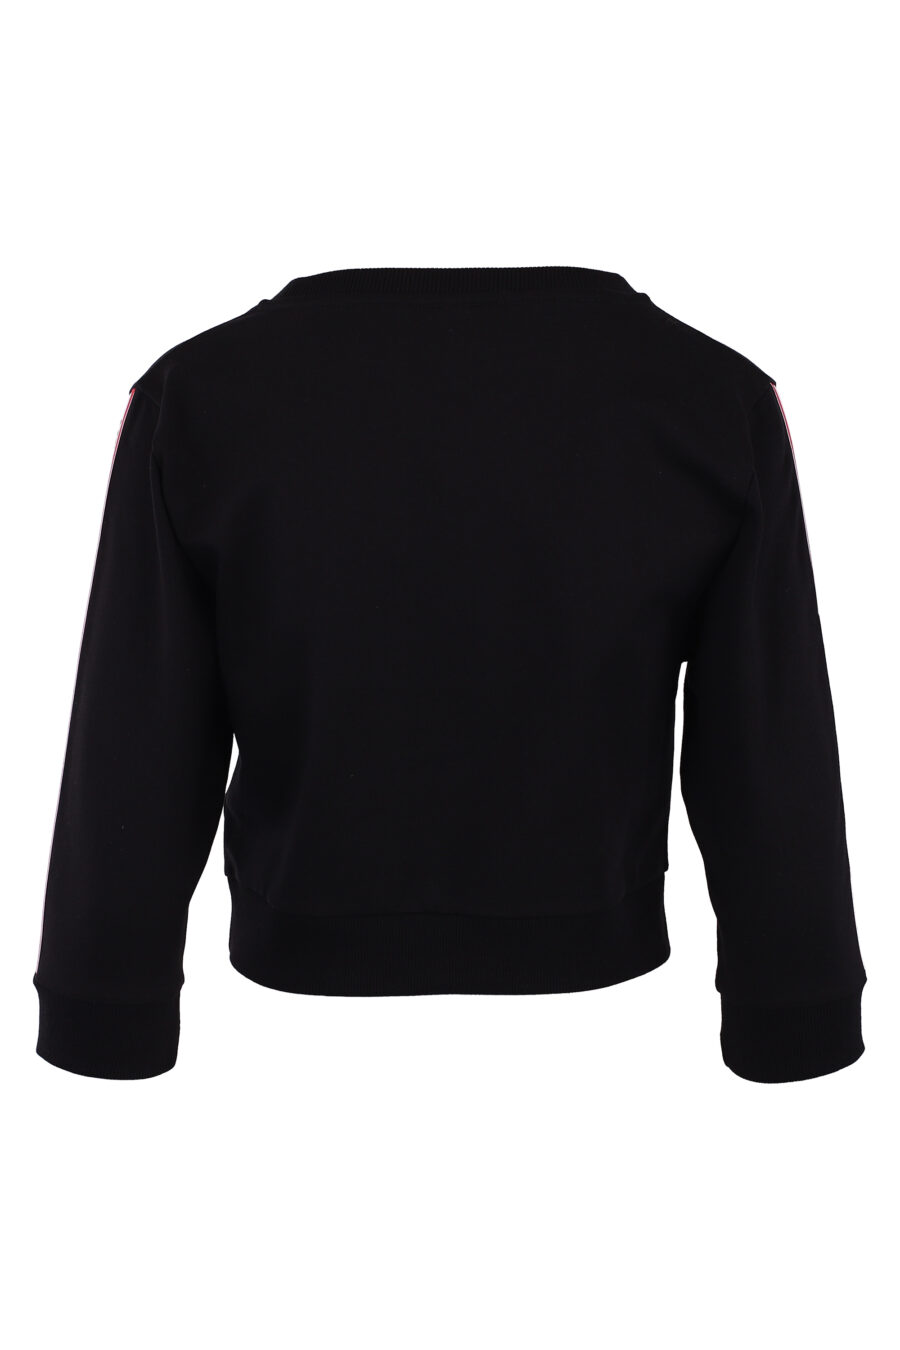 Black sweatshirt with ribbon logo on sleeves - IMG 6189